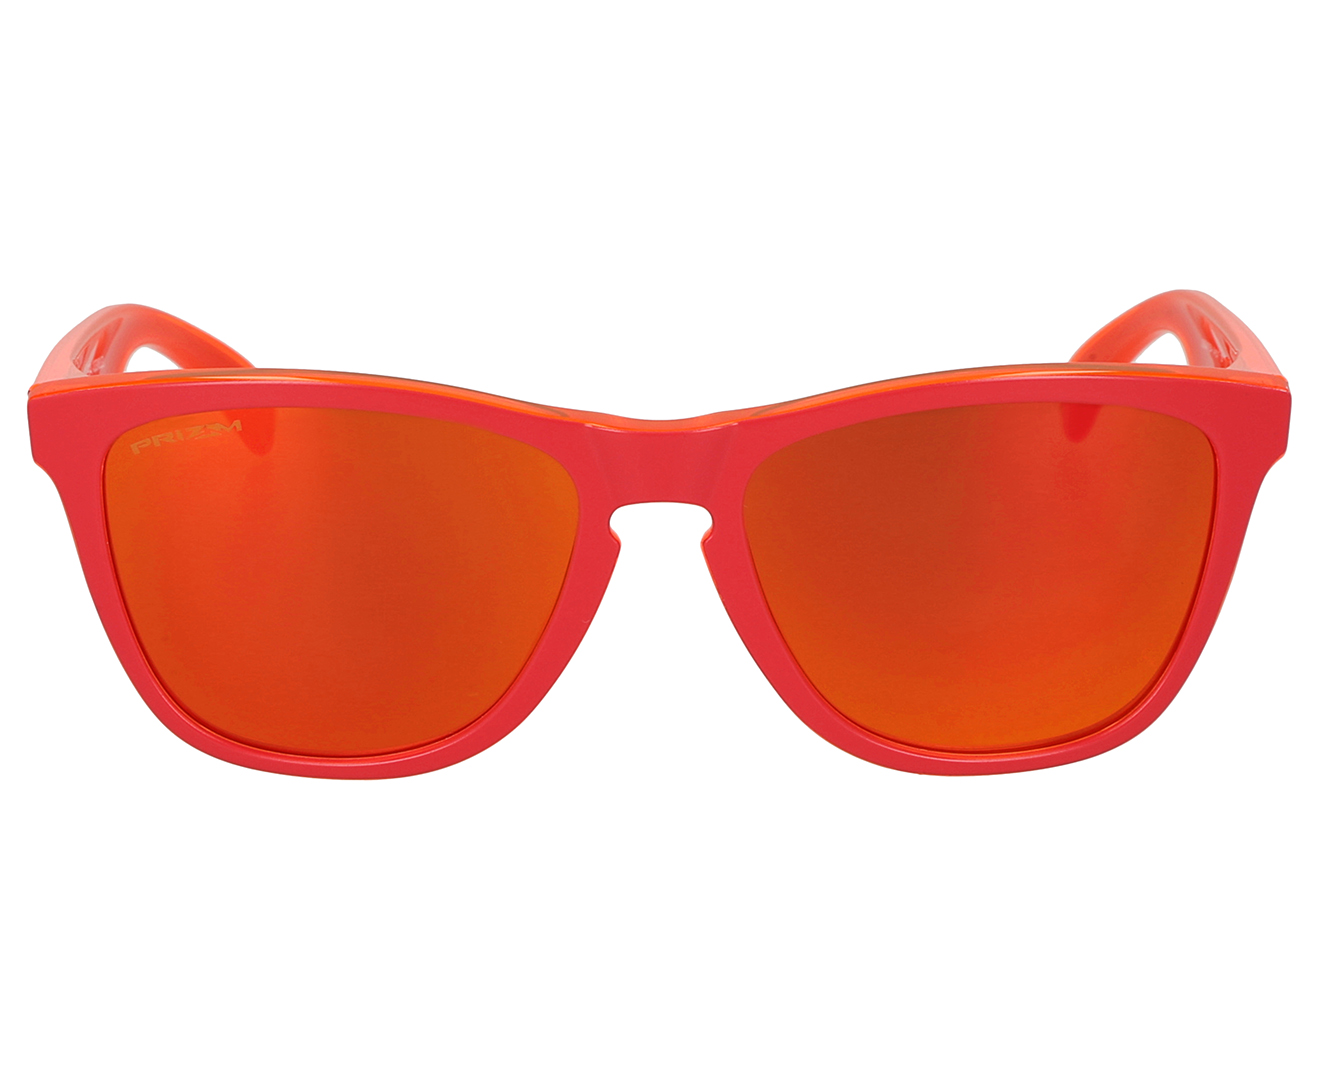 Oakley Frogskins Grips - Matte Red/Translucent Orange - Prizm Ruby